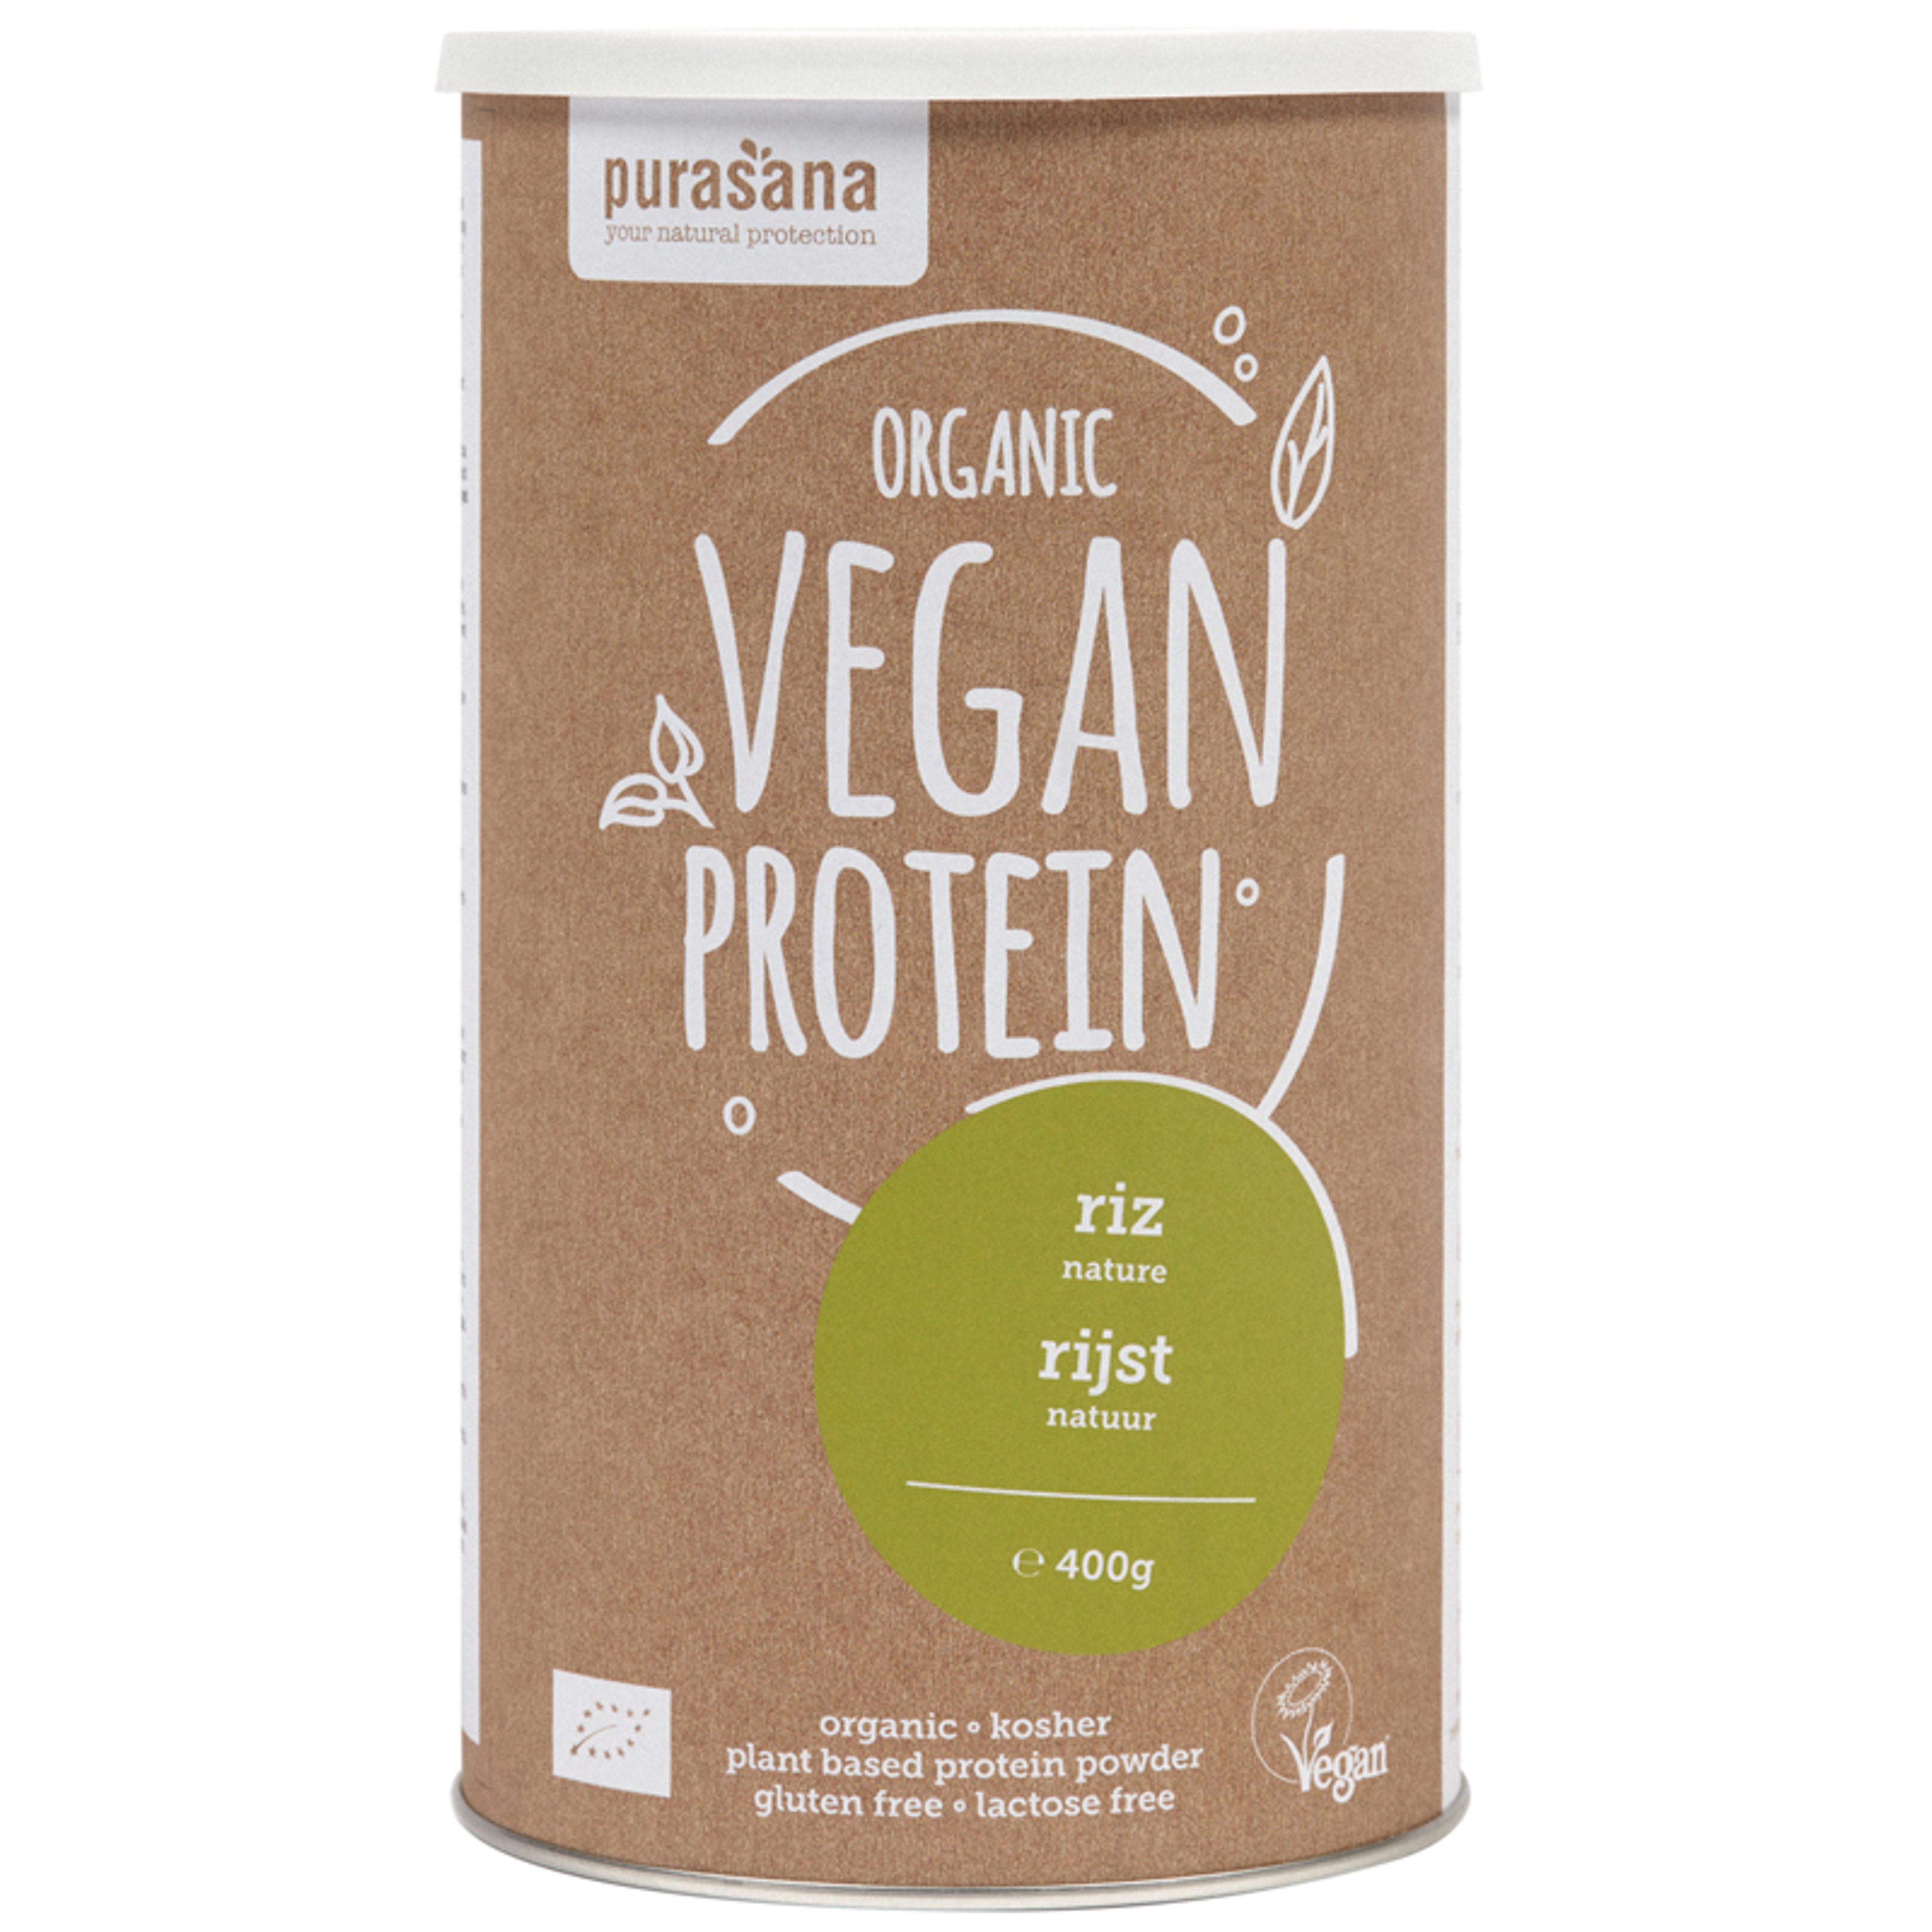 Purasana_Vegan-protein-Rice-naturel.jpg